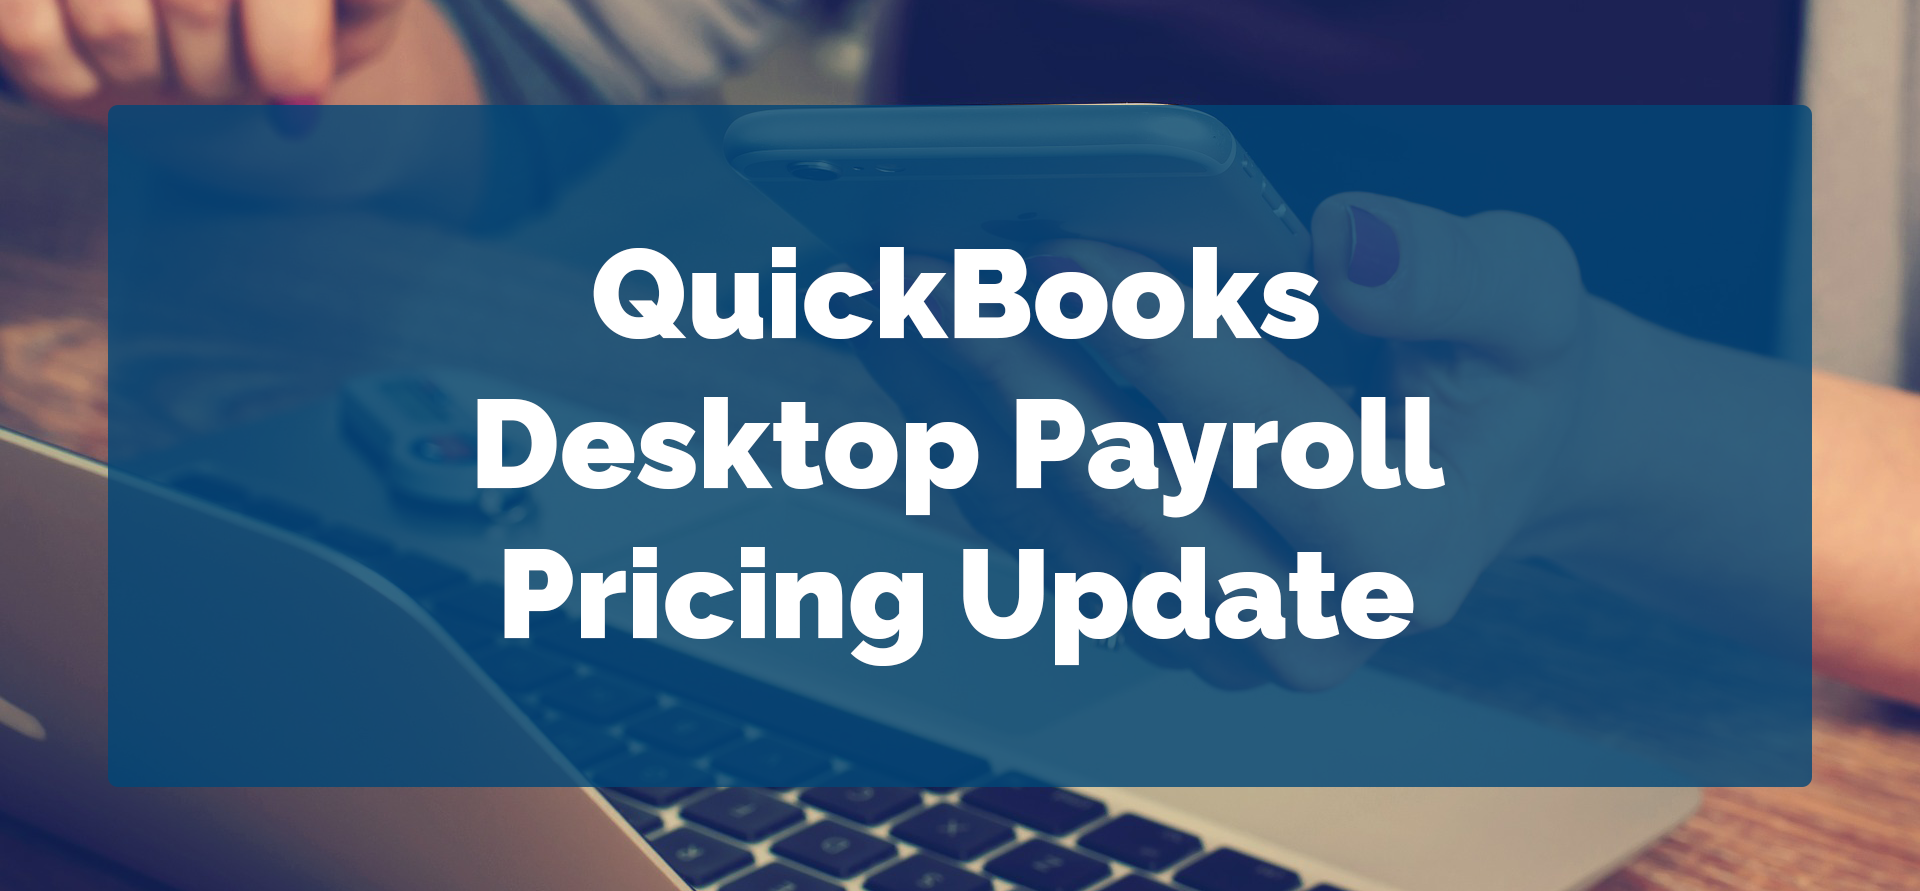 QuickBooks Desktop Payroll Pricing Update